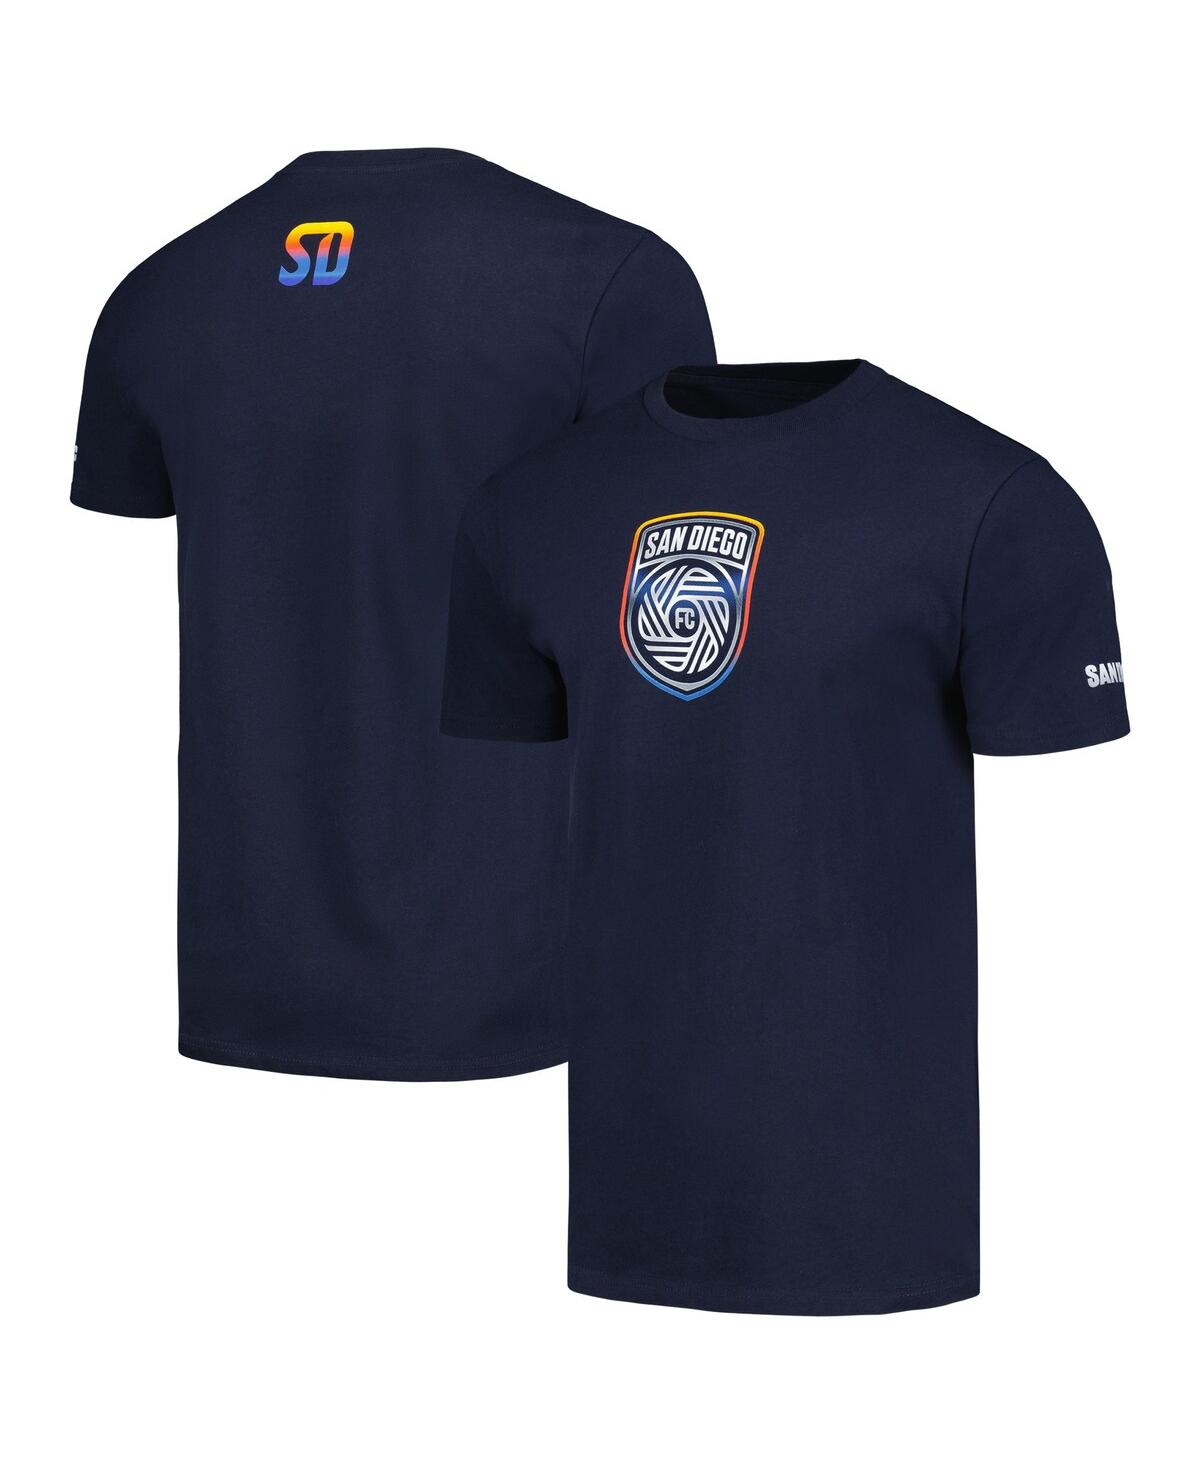 Men's and Women's Navy San Diego Fc Chrome T-shirt - Navy